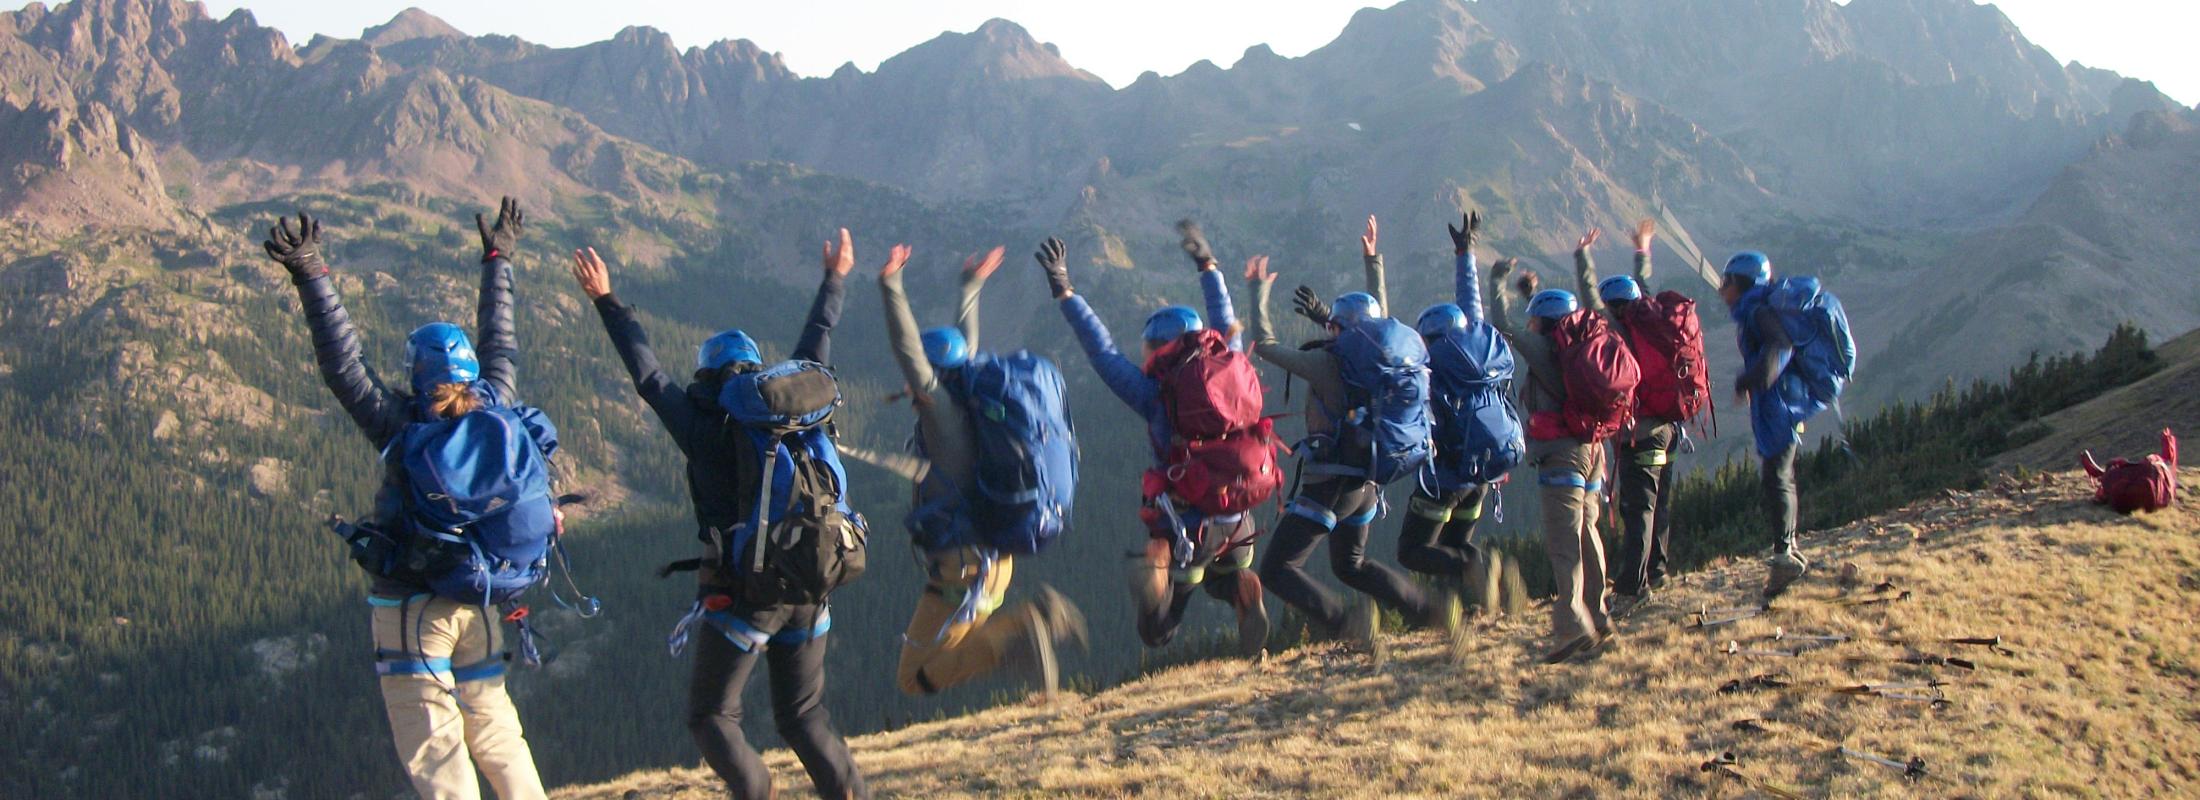 Backpacking participants jumping